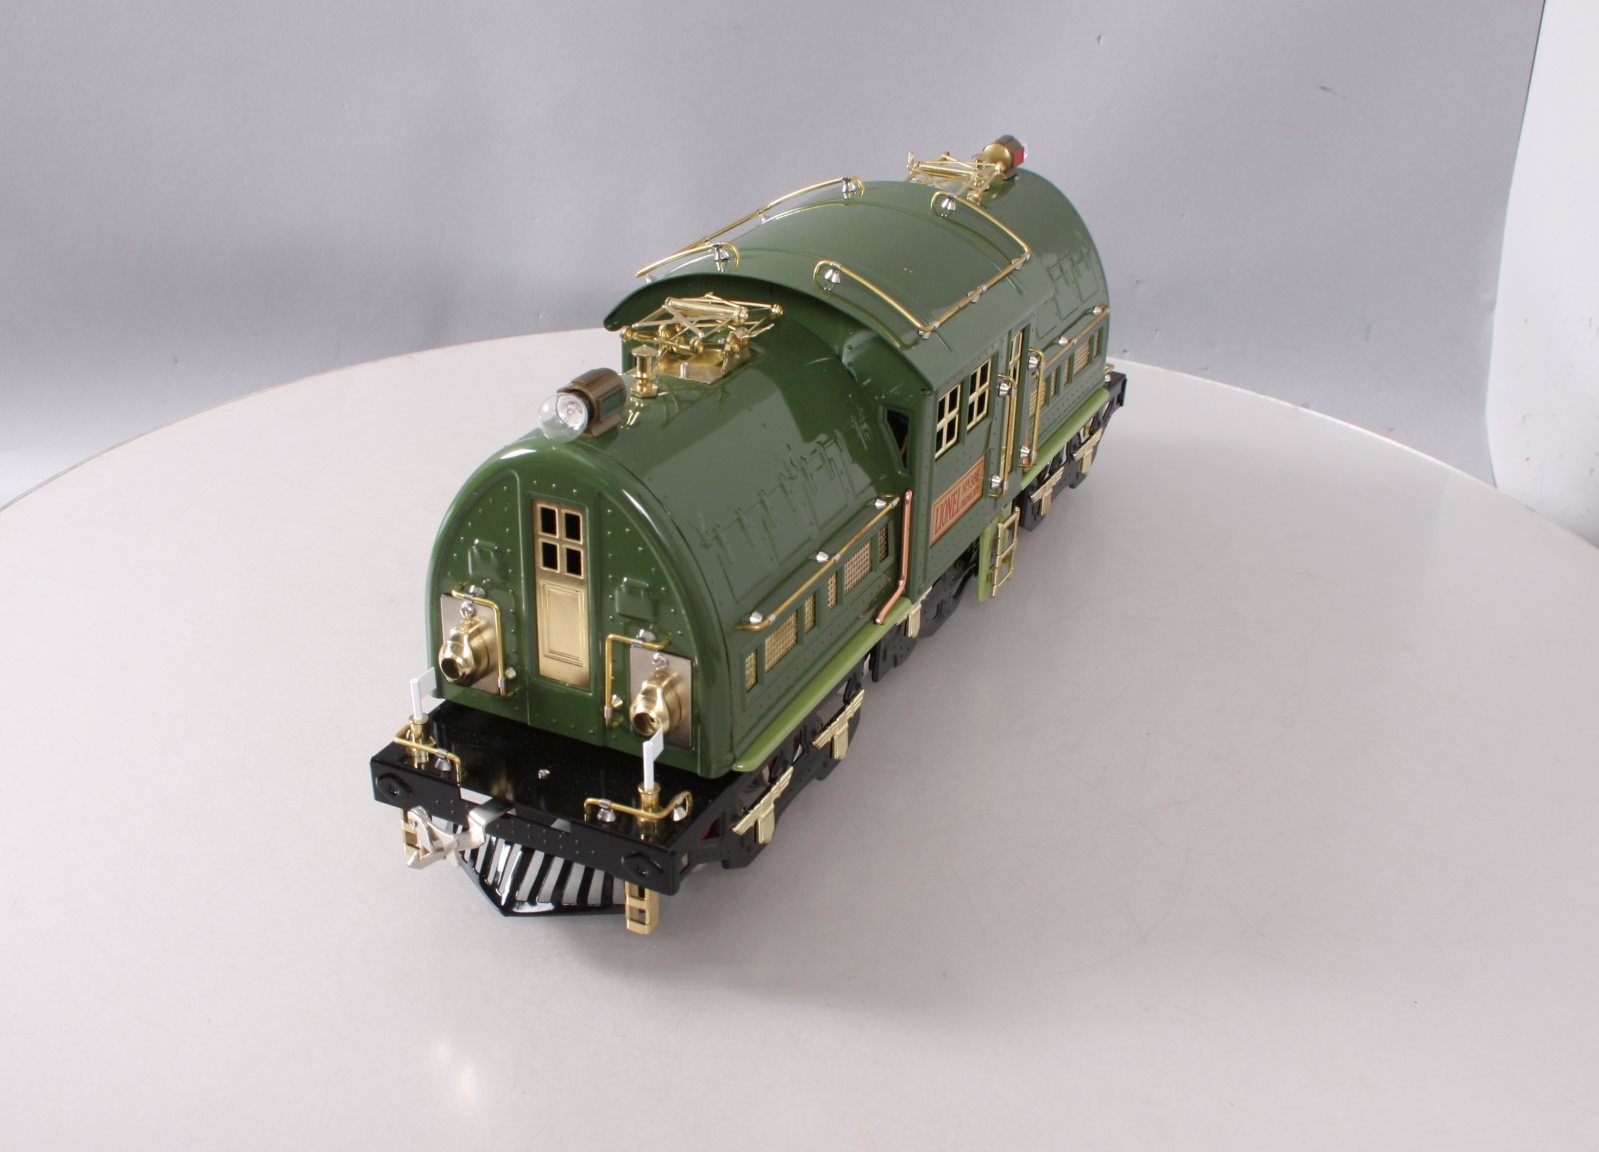 Lionel 6-13102 Standard Gauge I-381E 4-4-4 Two Tone Green Electric Locomotive